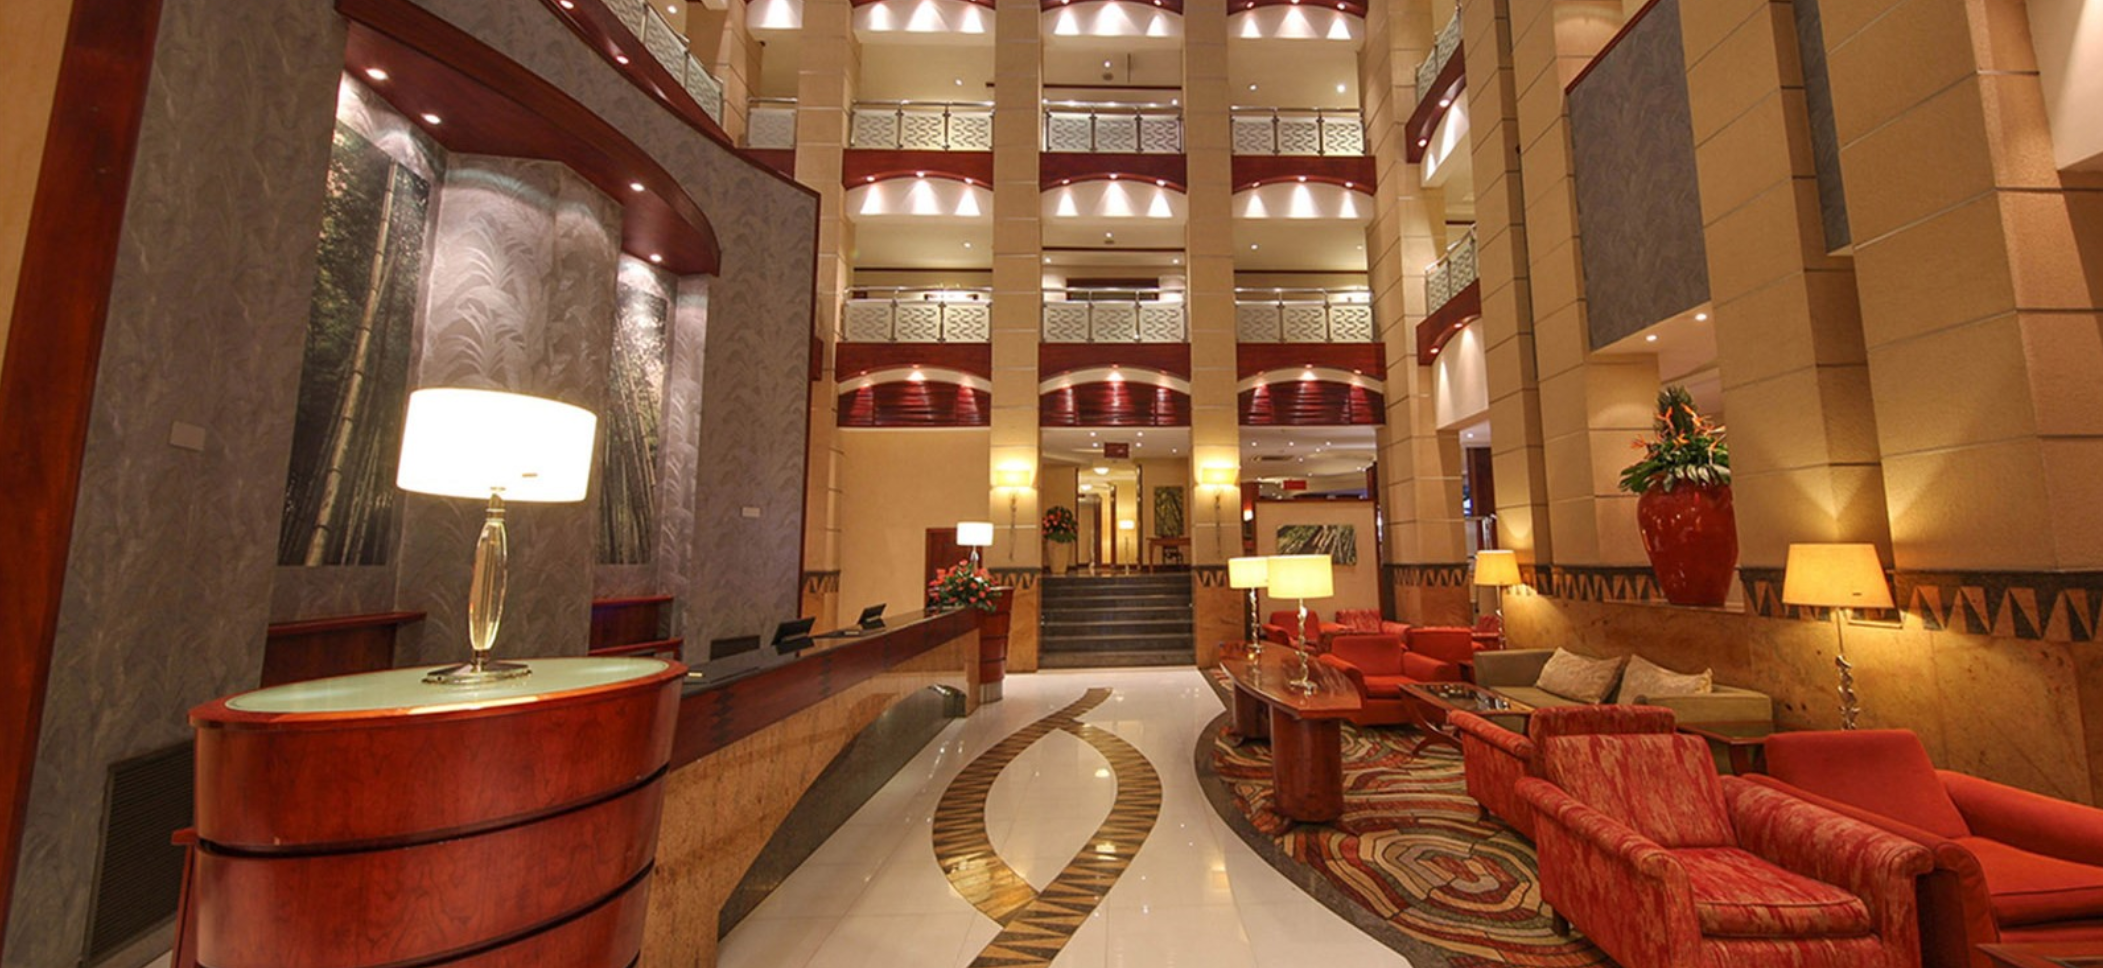 Kigali Serena Hotel grand lobby